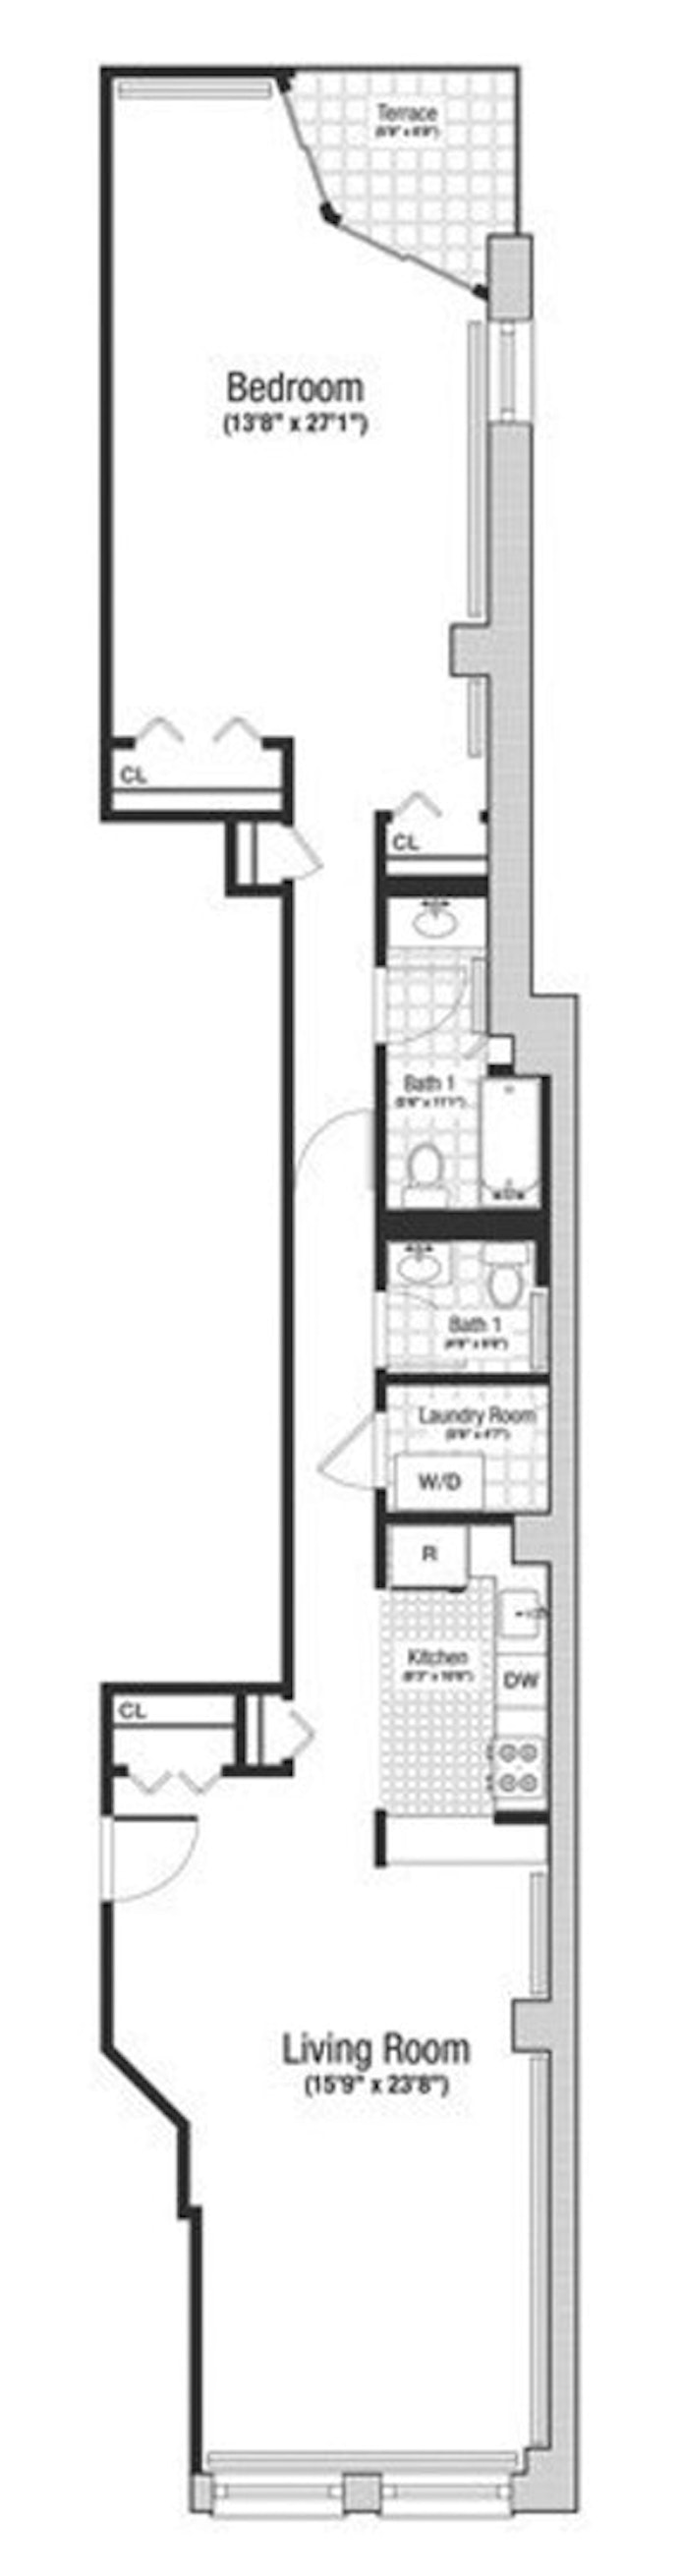 Floorplan for 36 Laight Street, 2A